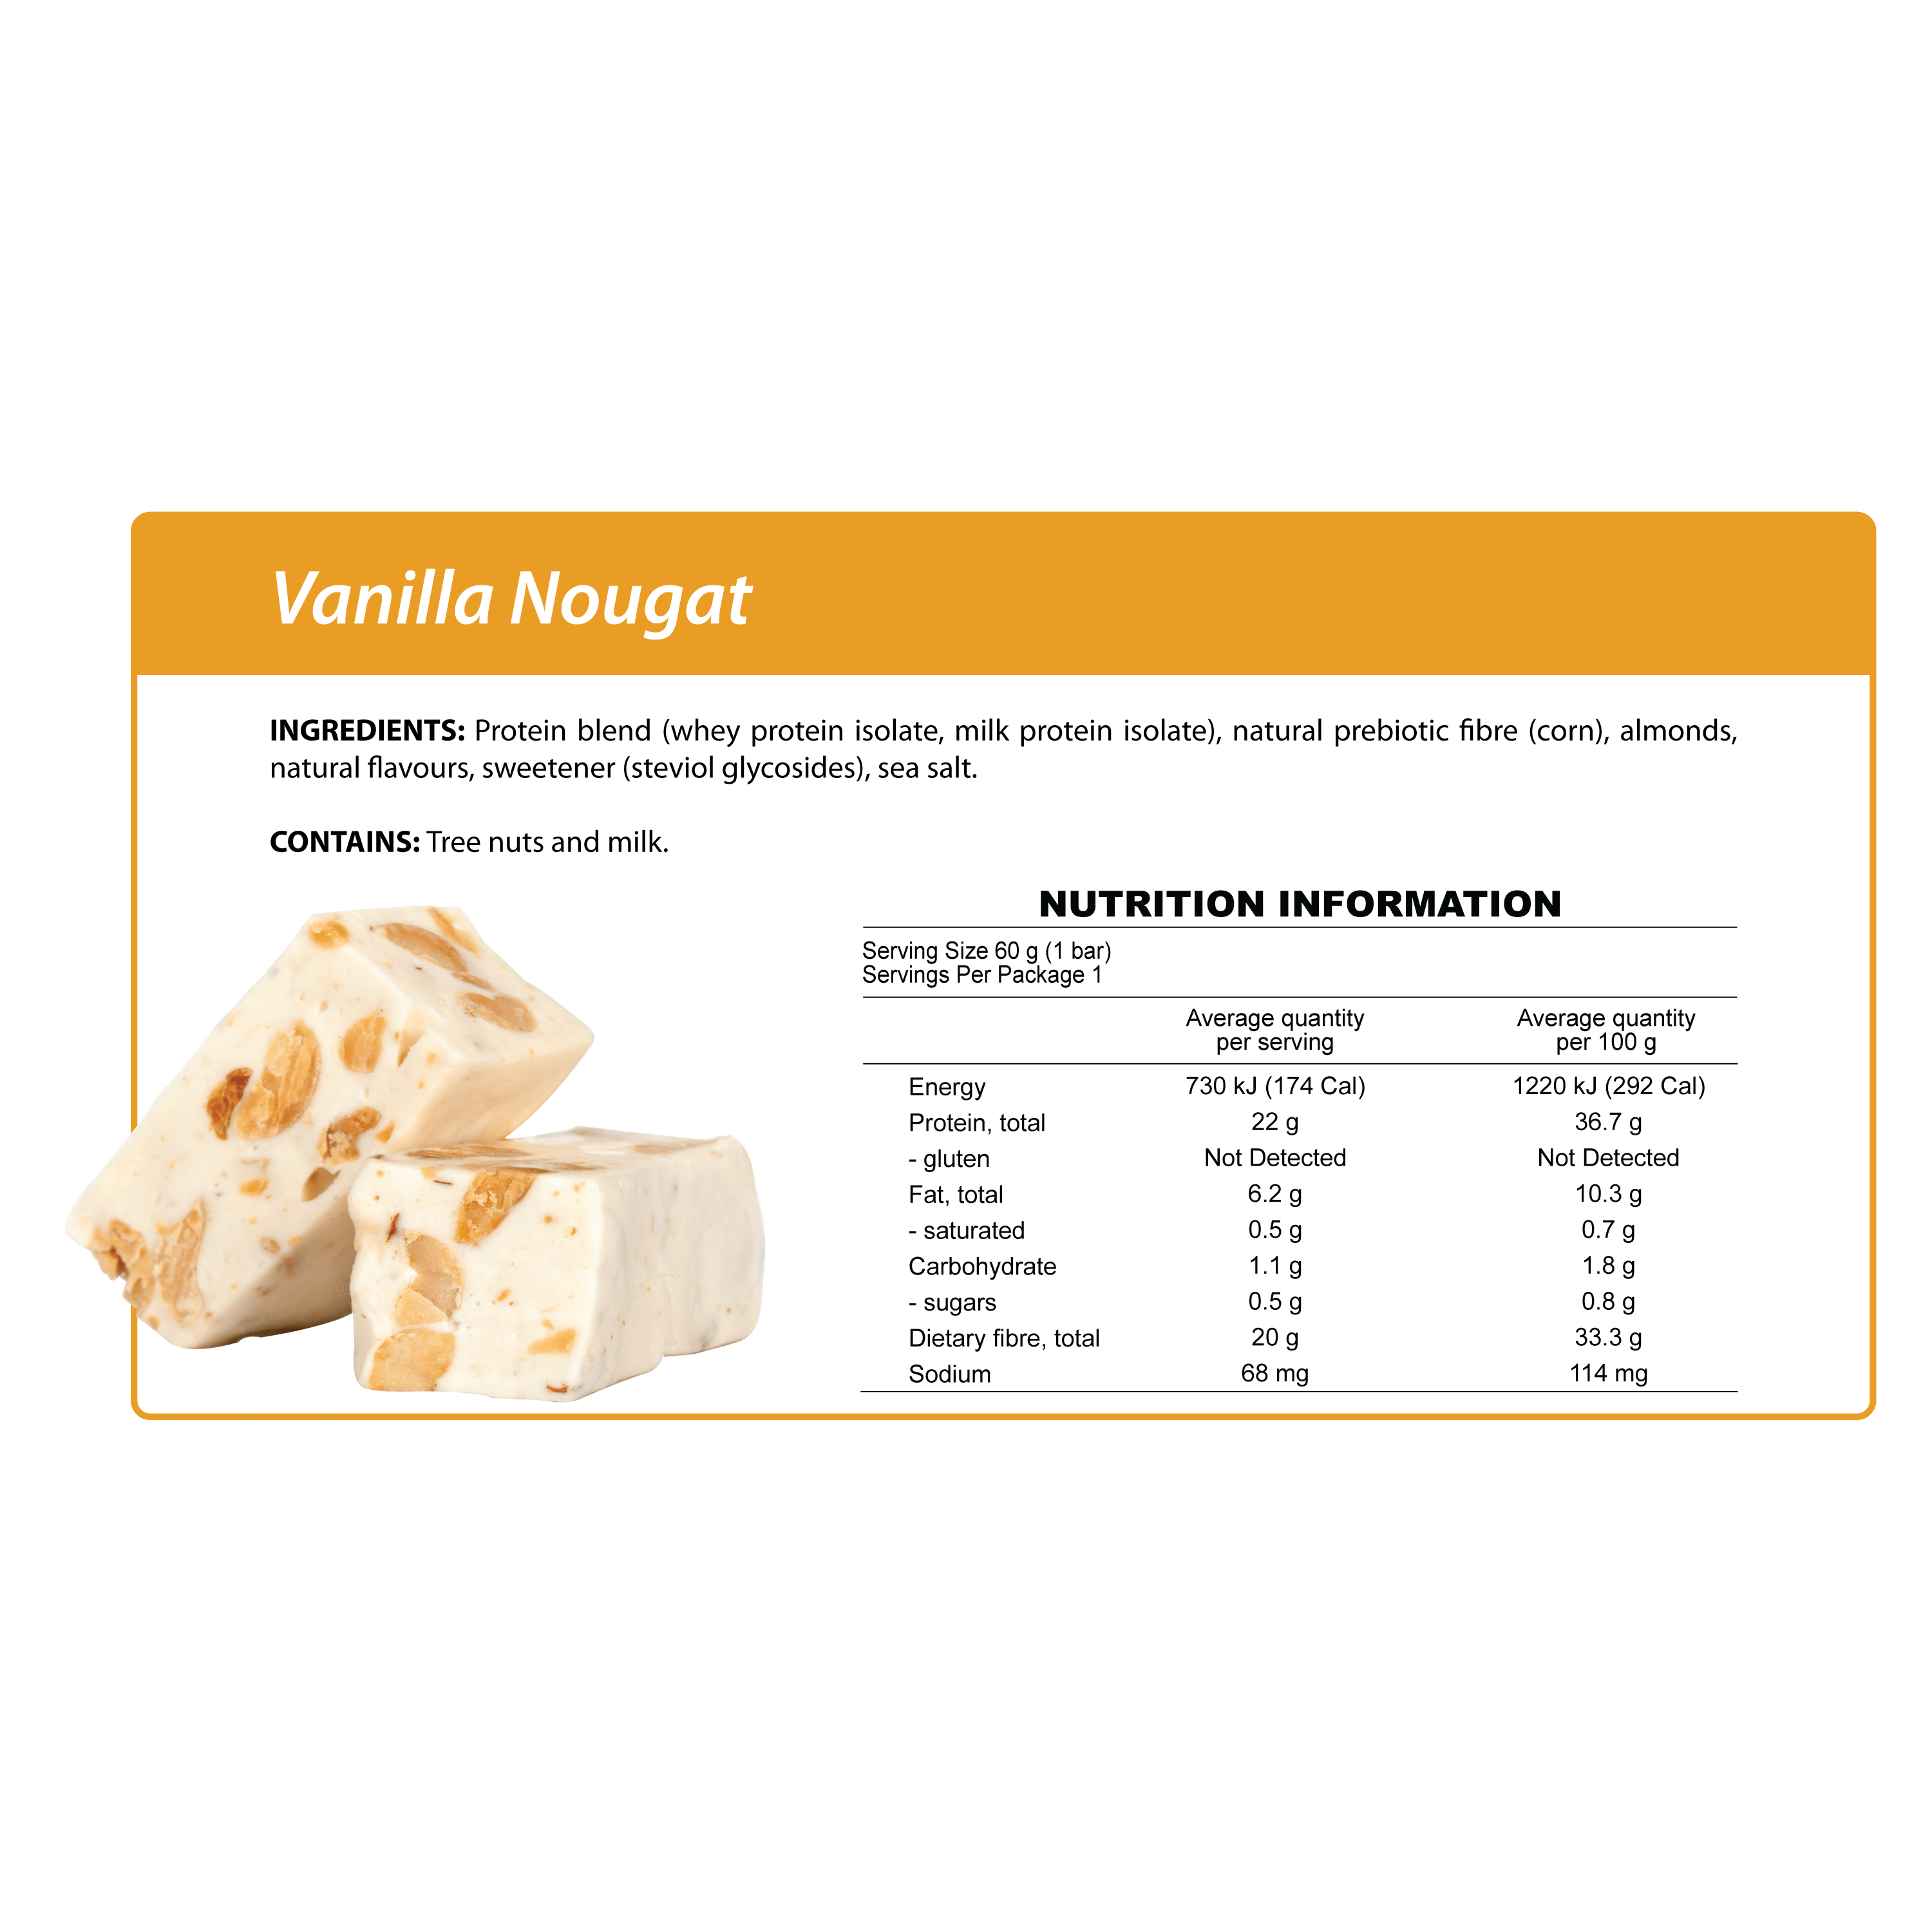 Smart Protein Bar - Vanilla Nougat - Box of 12 - 720g - Ketogenic Supplies